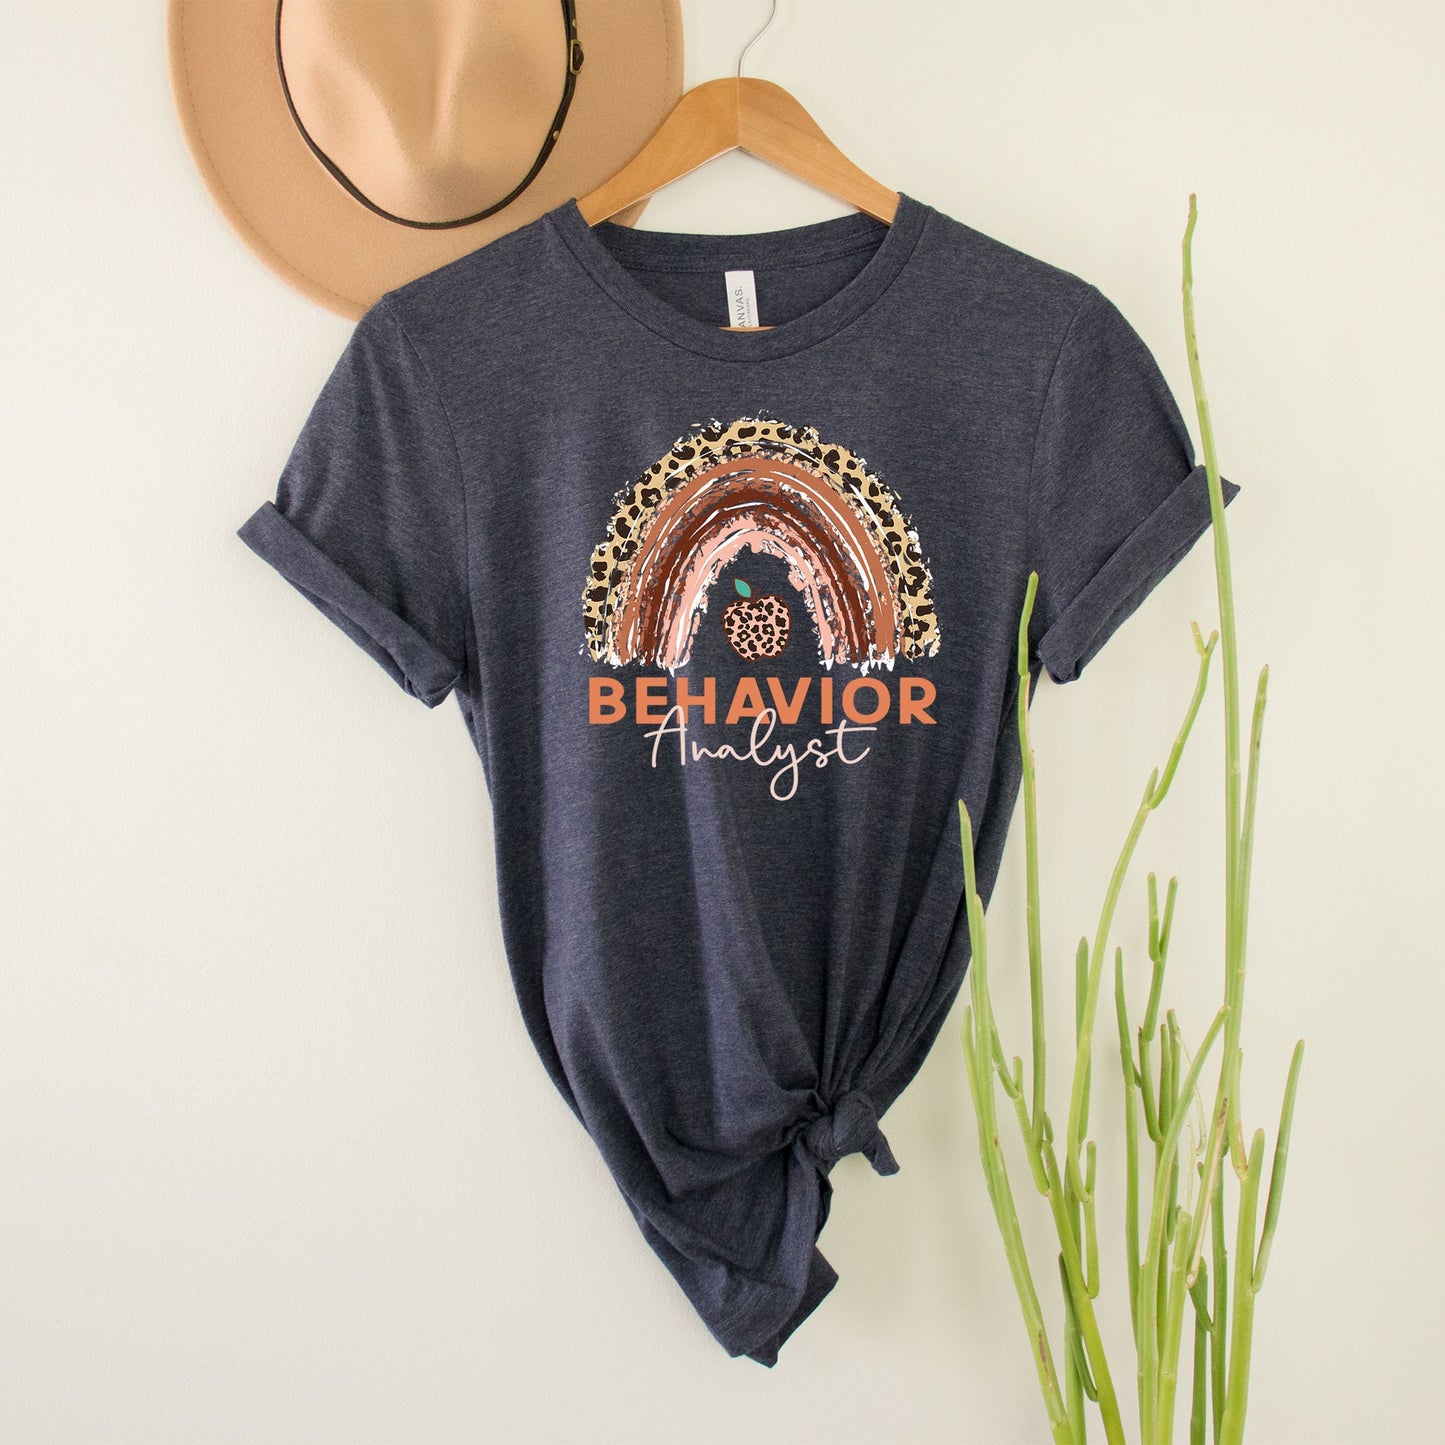 Behavior Analysis Shirt, Behavioral Therapist Gift, RBT BCBA ABA Special Education Behavior Teacher, Future Learning Behavior Specialist Tee